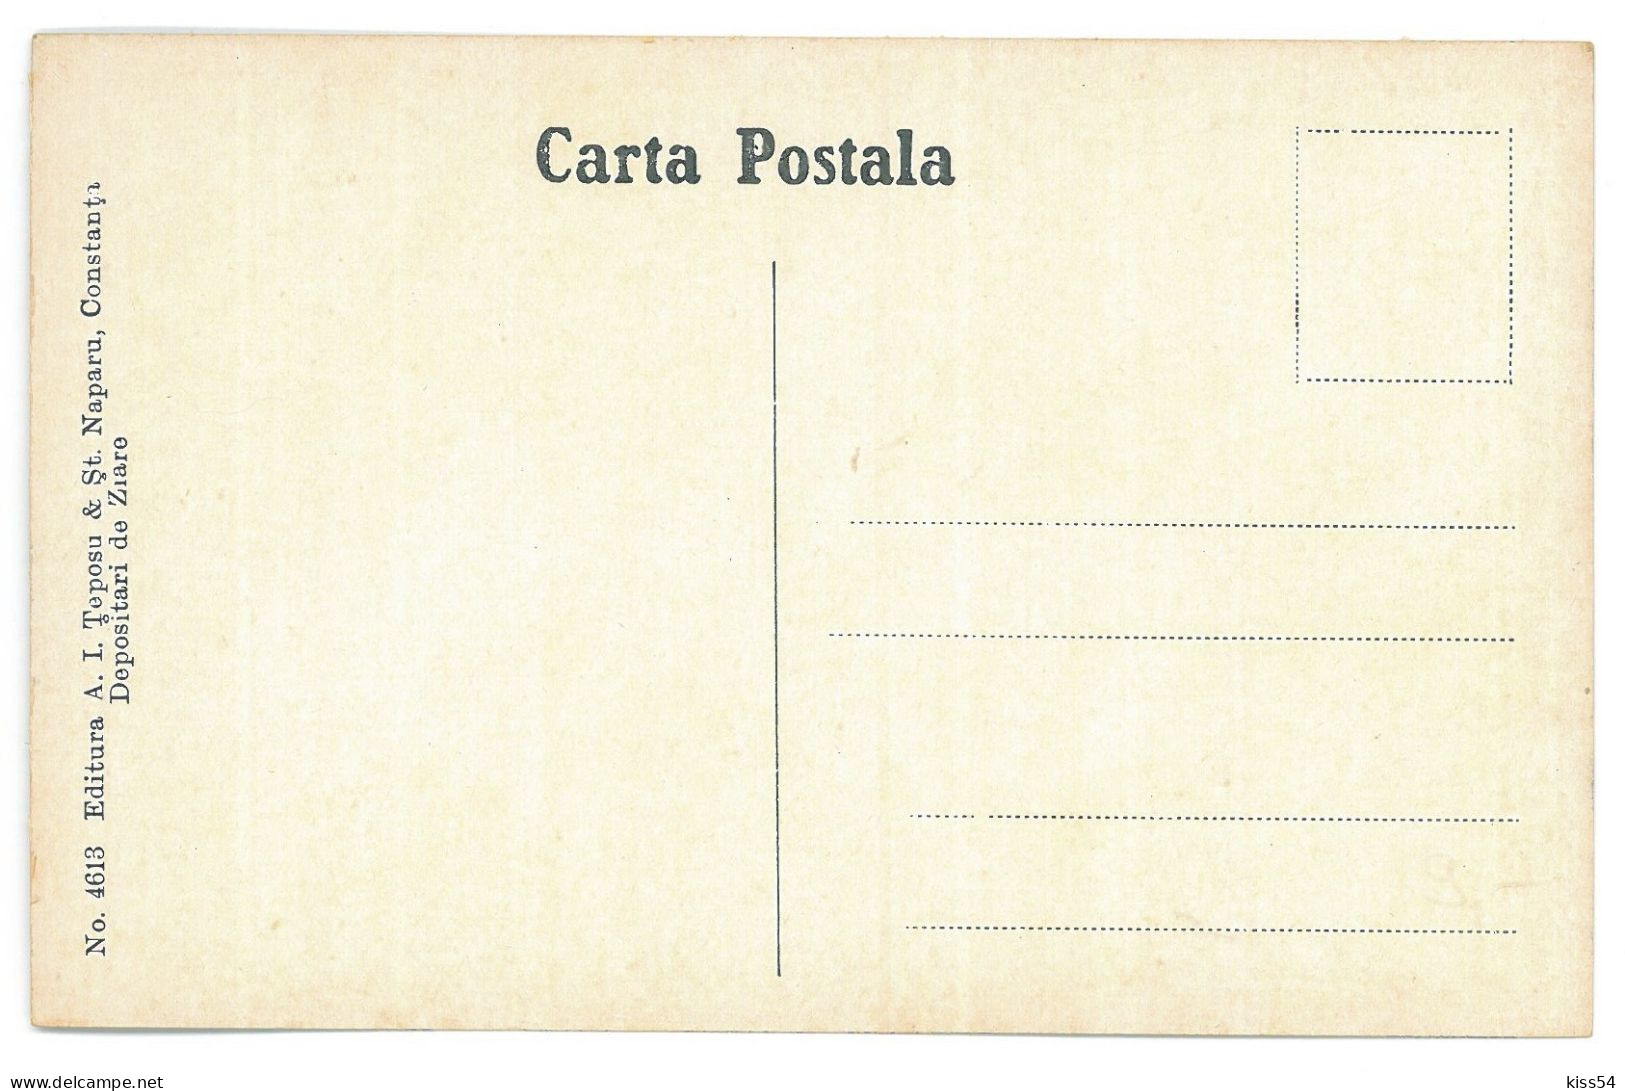 RO - 25362 CONSTANTA, Stefan Cel Mare Street, Romania - Old Postcard - Unused - Romania